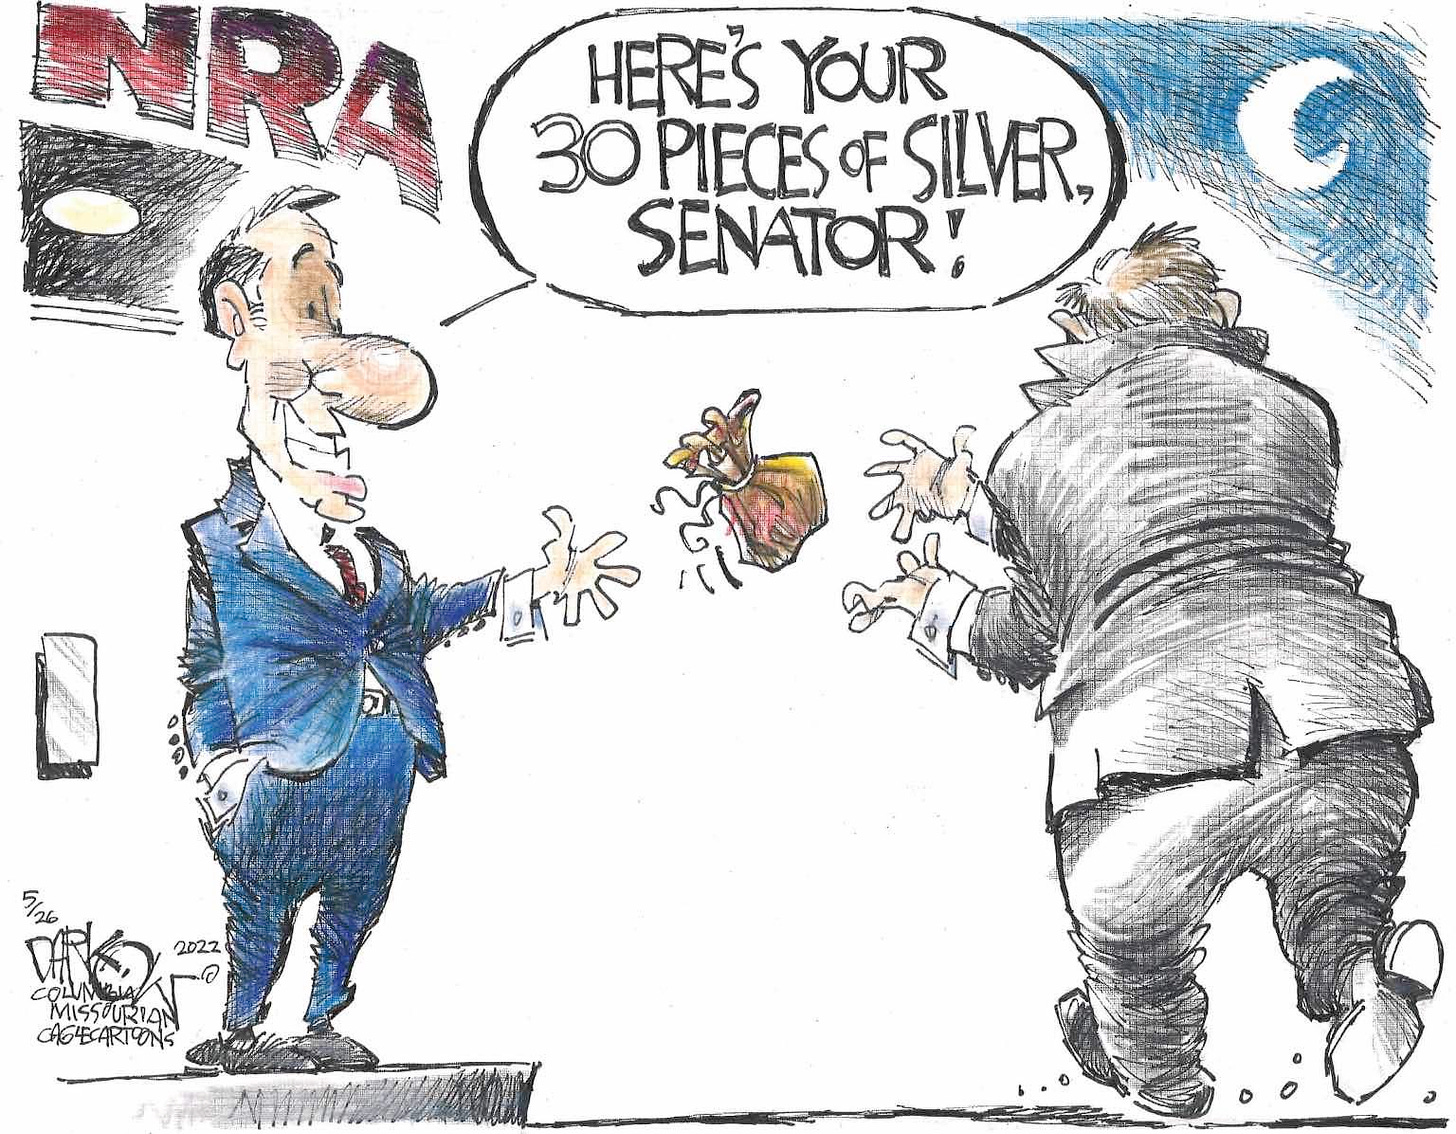 NRA Gun lobby donations to Republicans blocks gun safety bills.